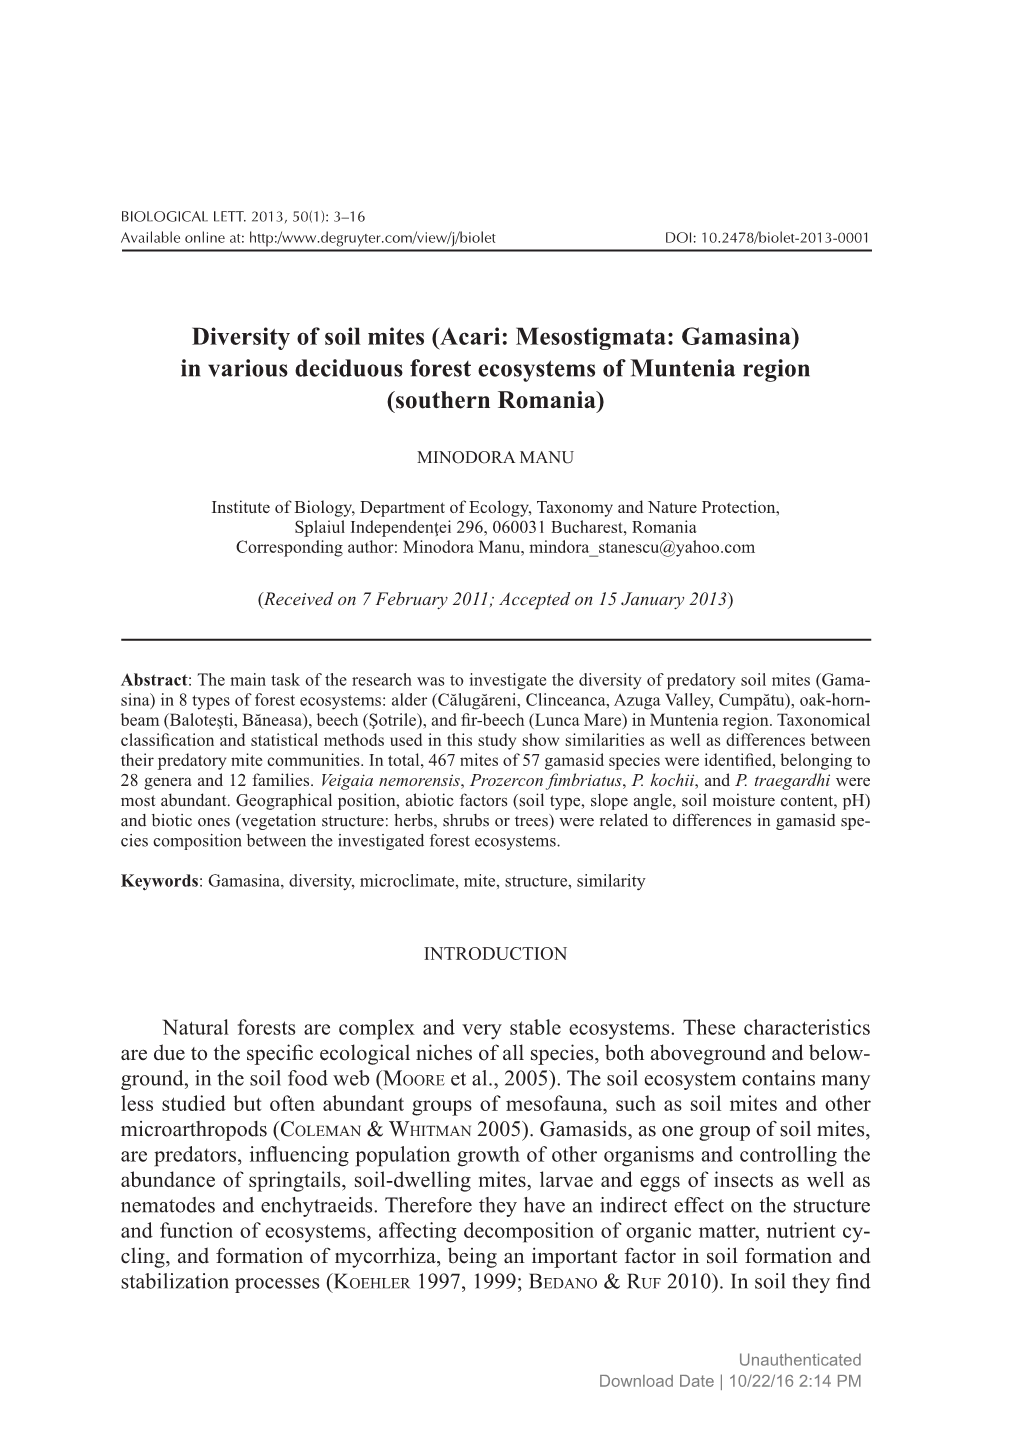 Diversity of Soil Mites (Acari: Mesostigmata: Gamasina) in Various Deciduous Forest Ecosystems of Muntenia Region (Southern Romania)